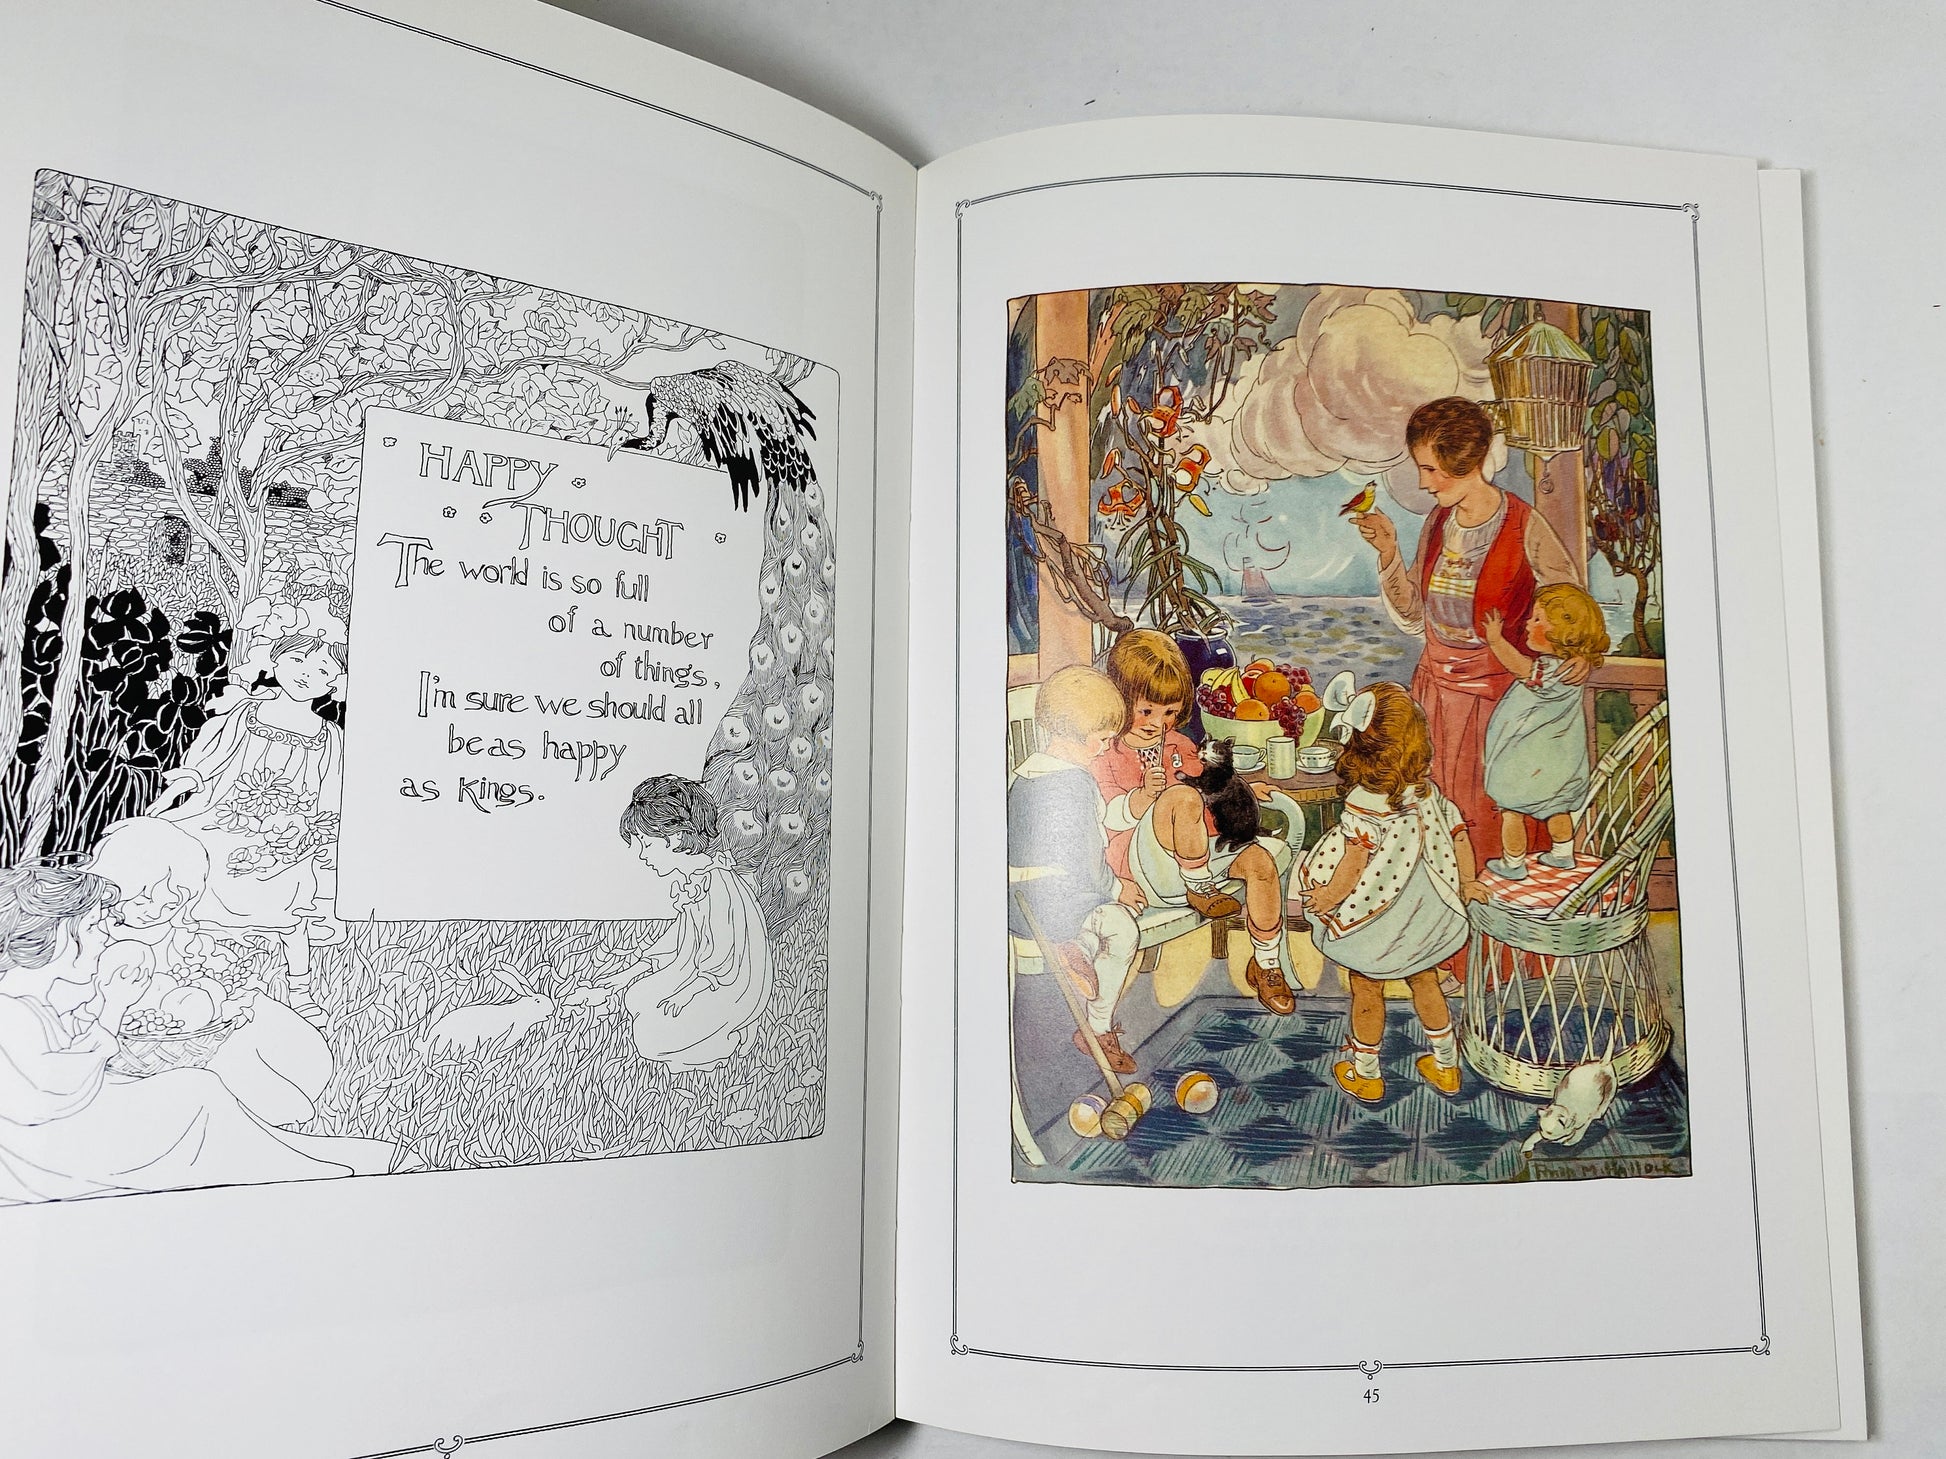 Child's Garden of Verses by Robert Louis Stevenson collected by Cooper Edens Vintage Children's book. Nursery